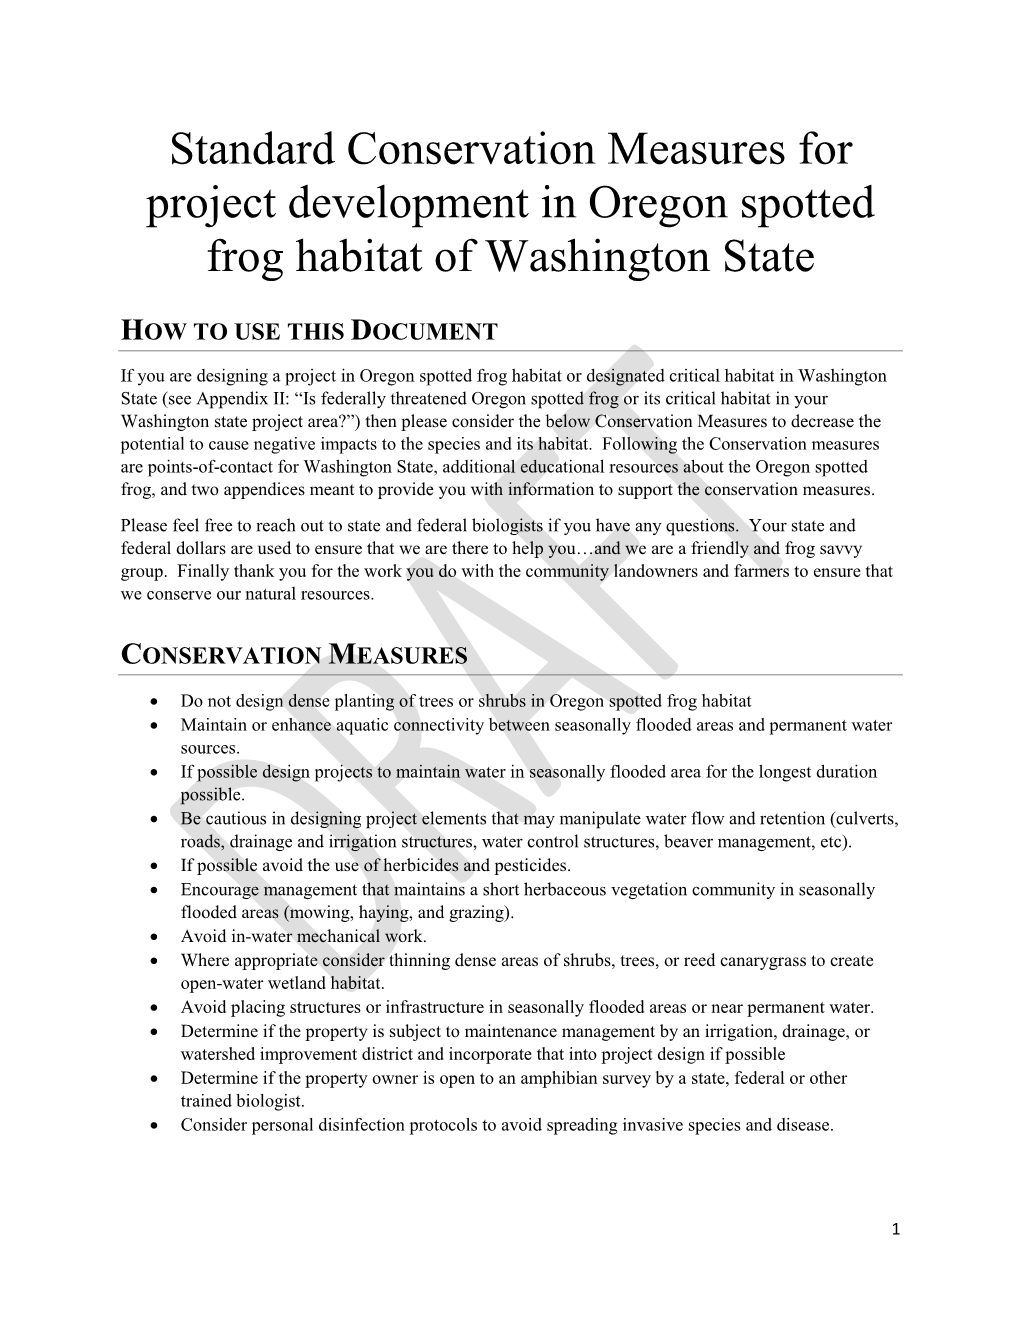 Standard Conservation Measures for Project Development in Oregon Spotted Frog Habitat of Washington State